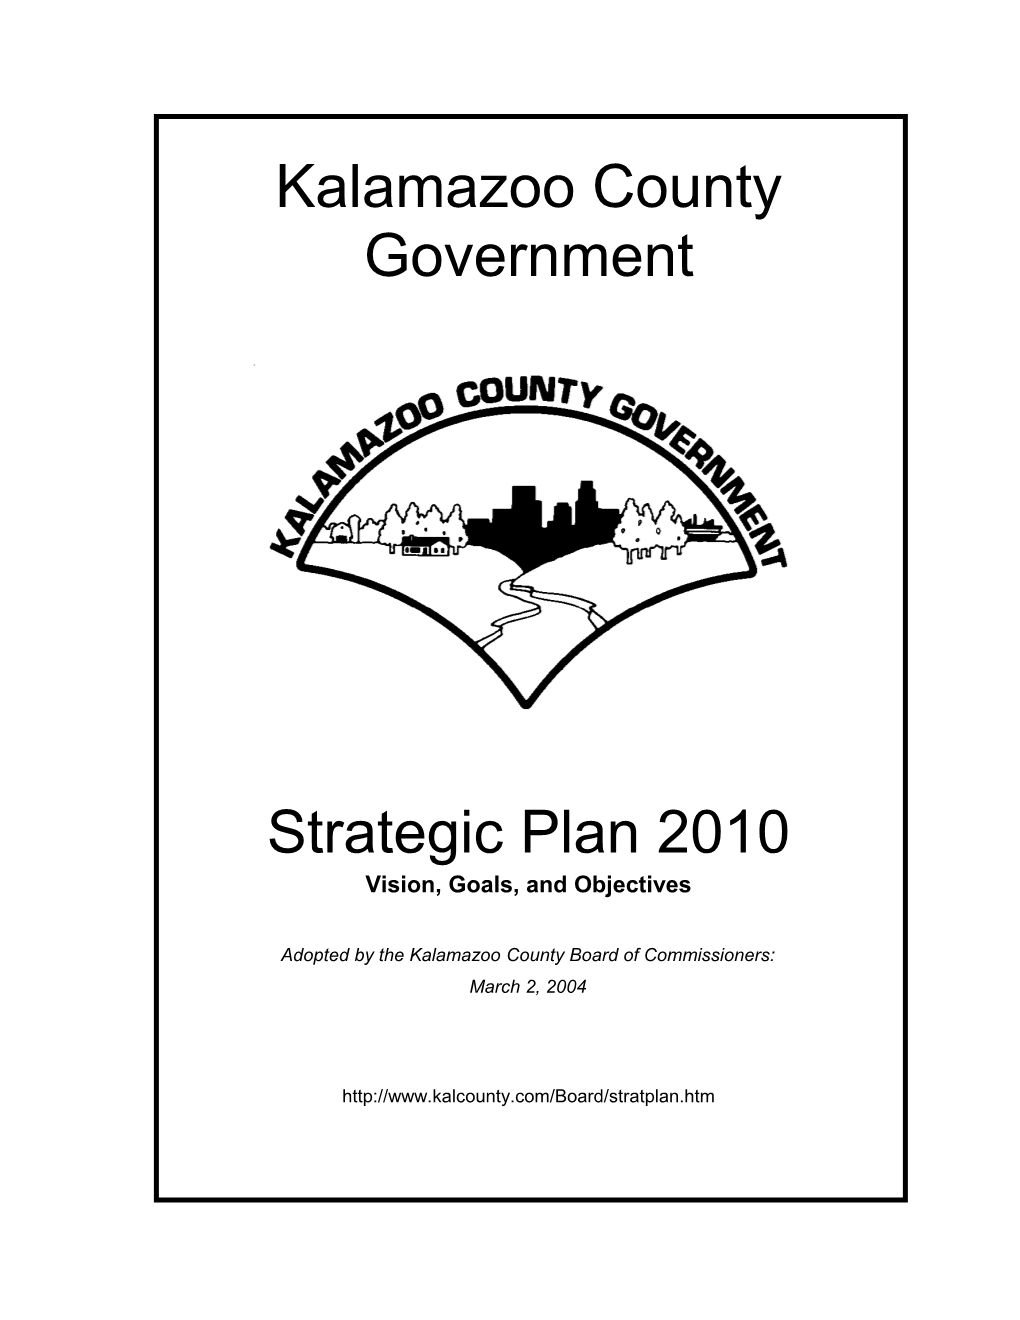 Kalamazoo County Board of Commissioners